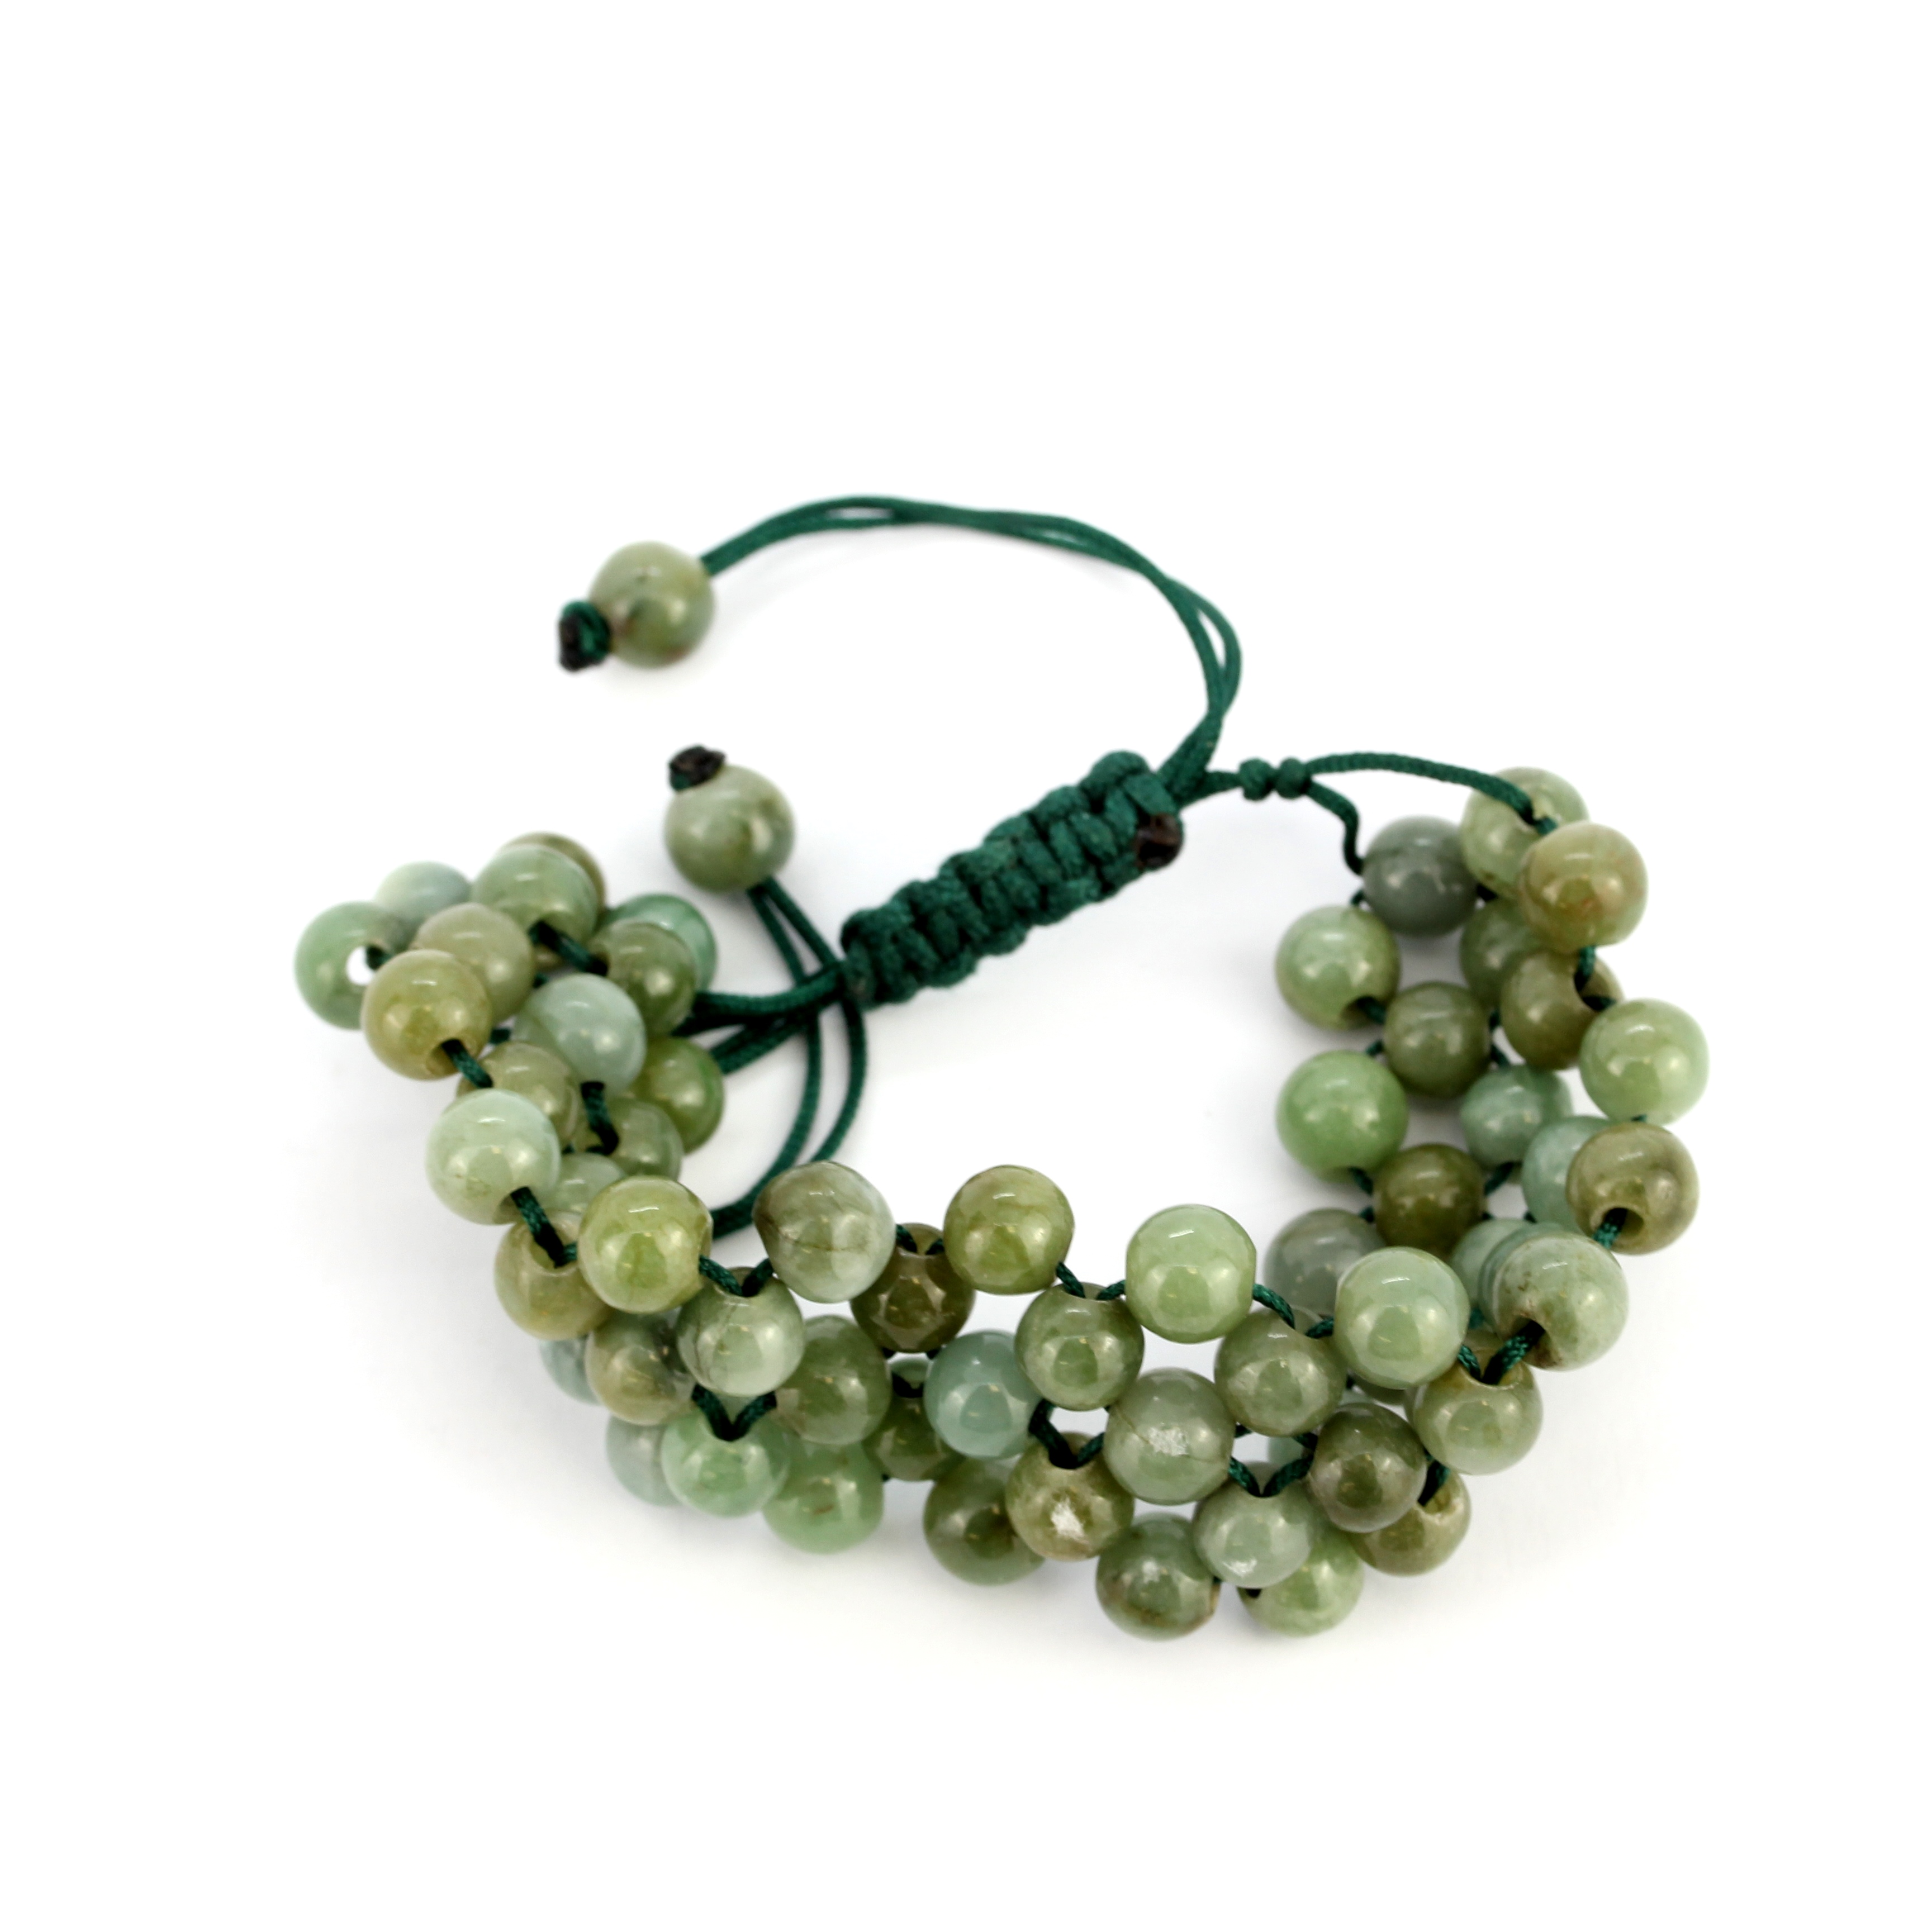 A nephrite jade bead bracelet.